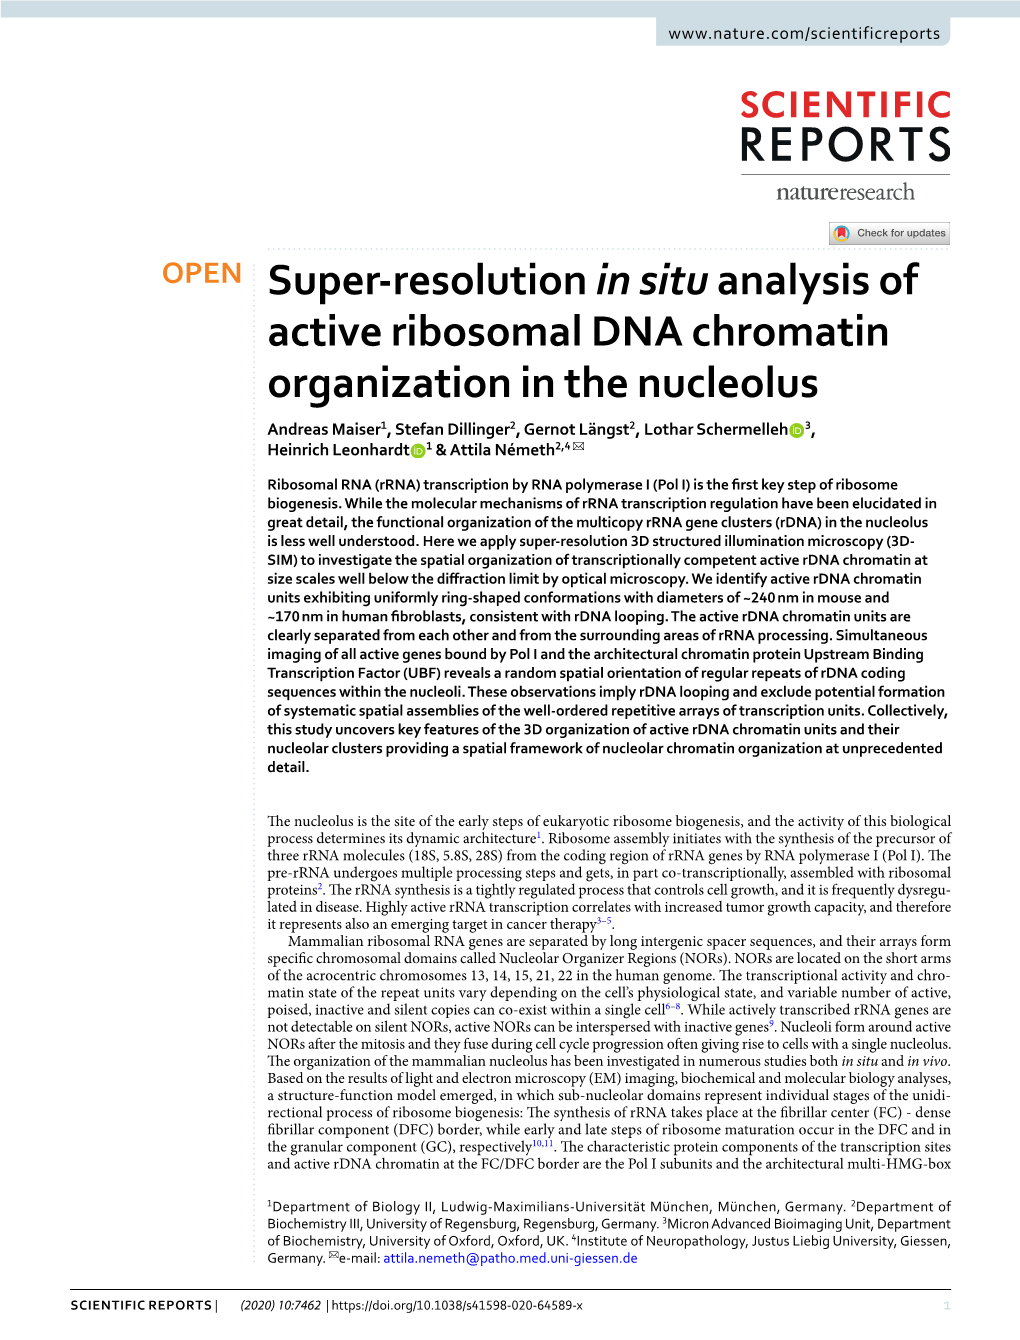 Super-Resolution in Situ Analysis of Active Ribosomal DNA Chromatin